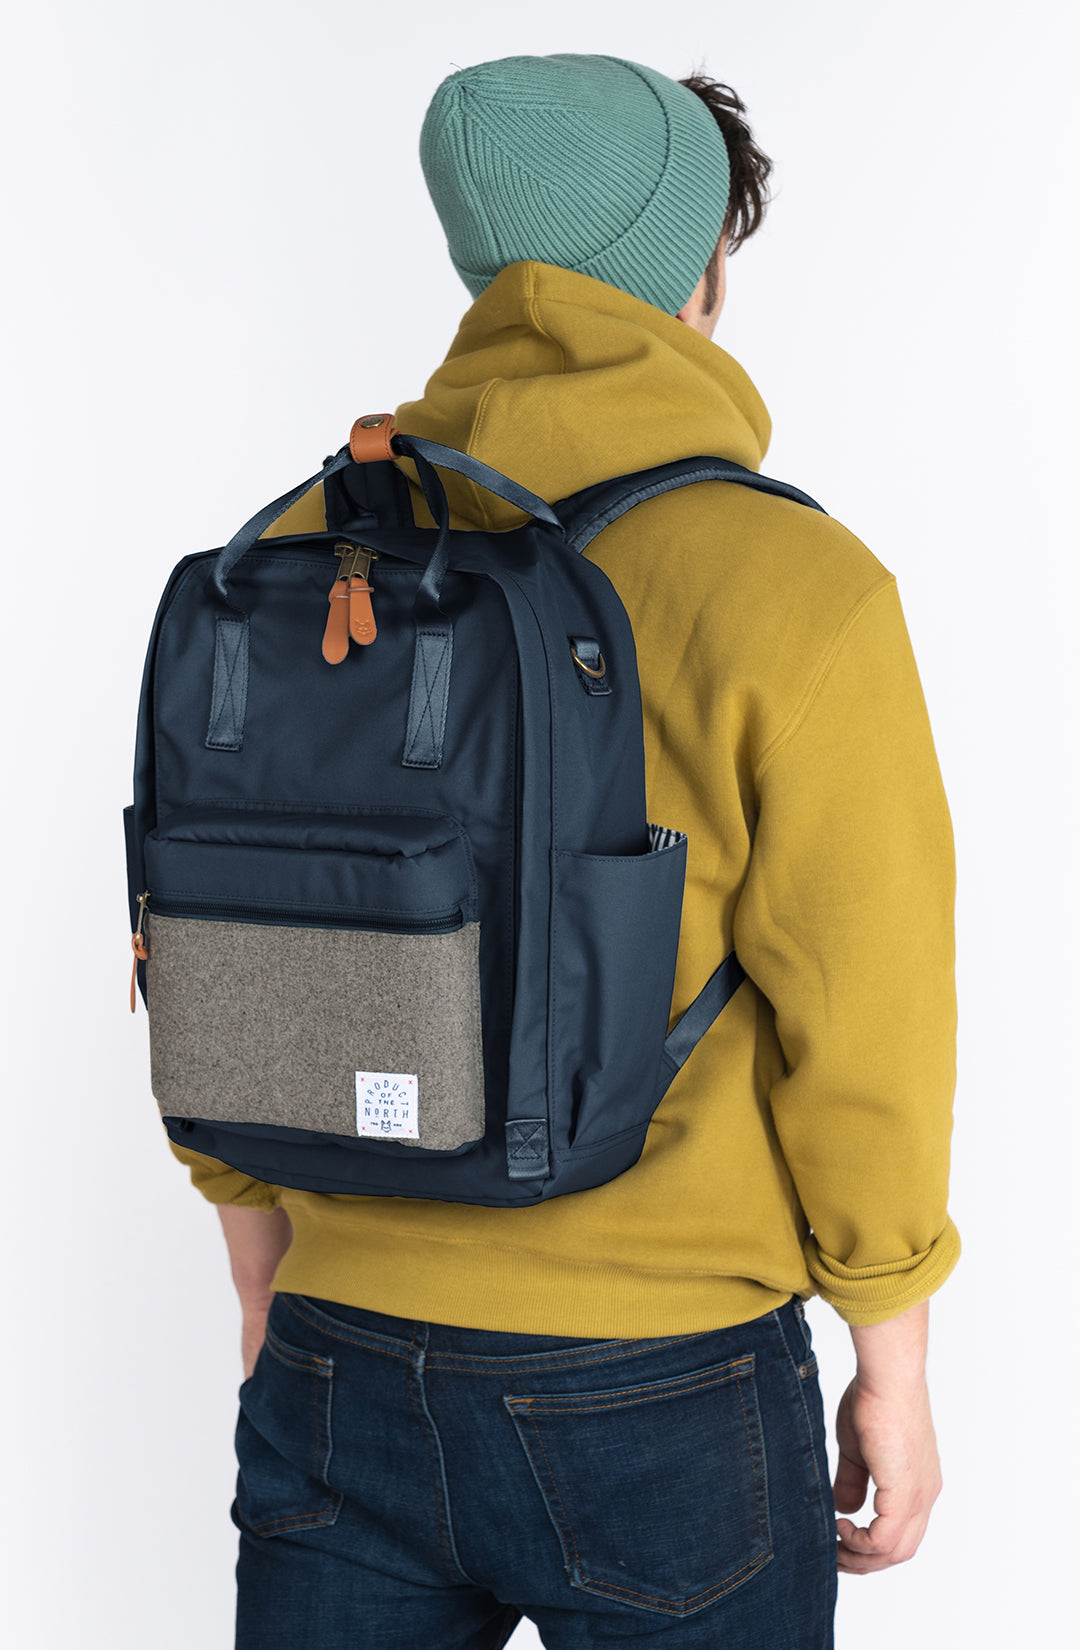 Elkin Diaper Bag Backpack (Navy Blue)